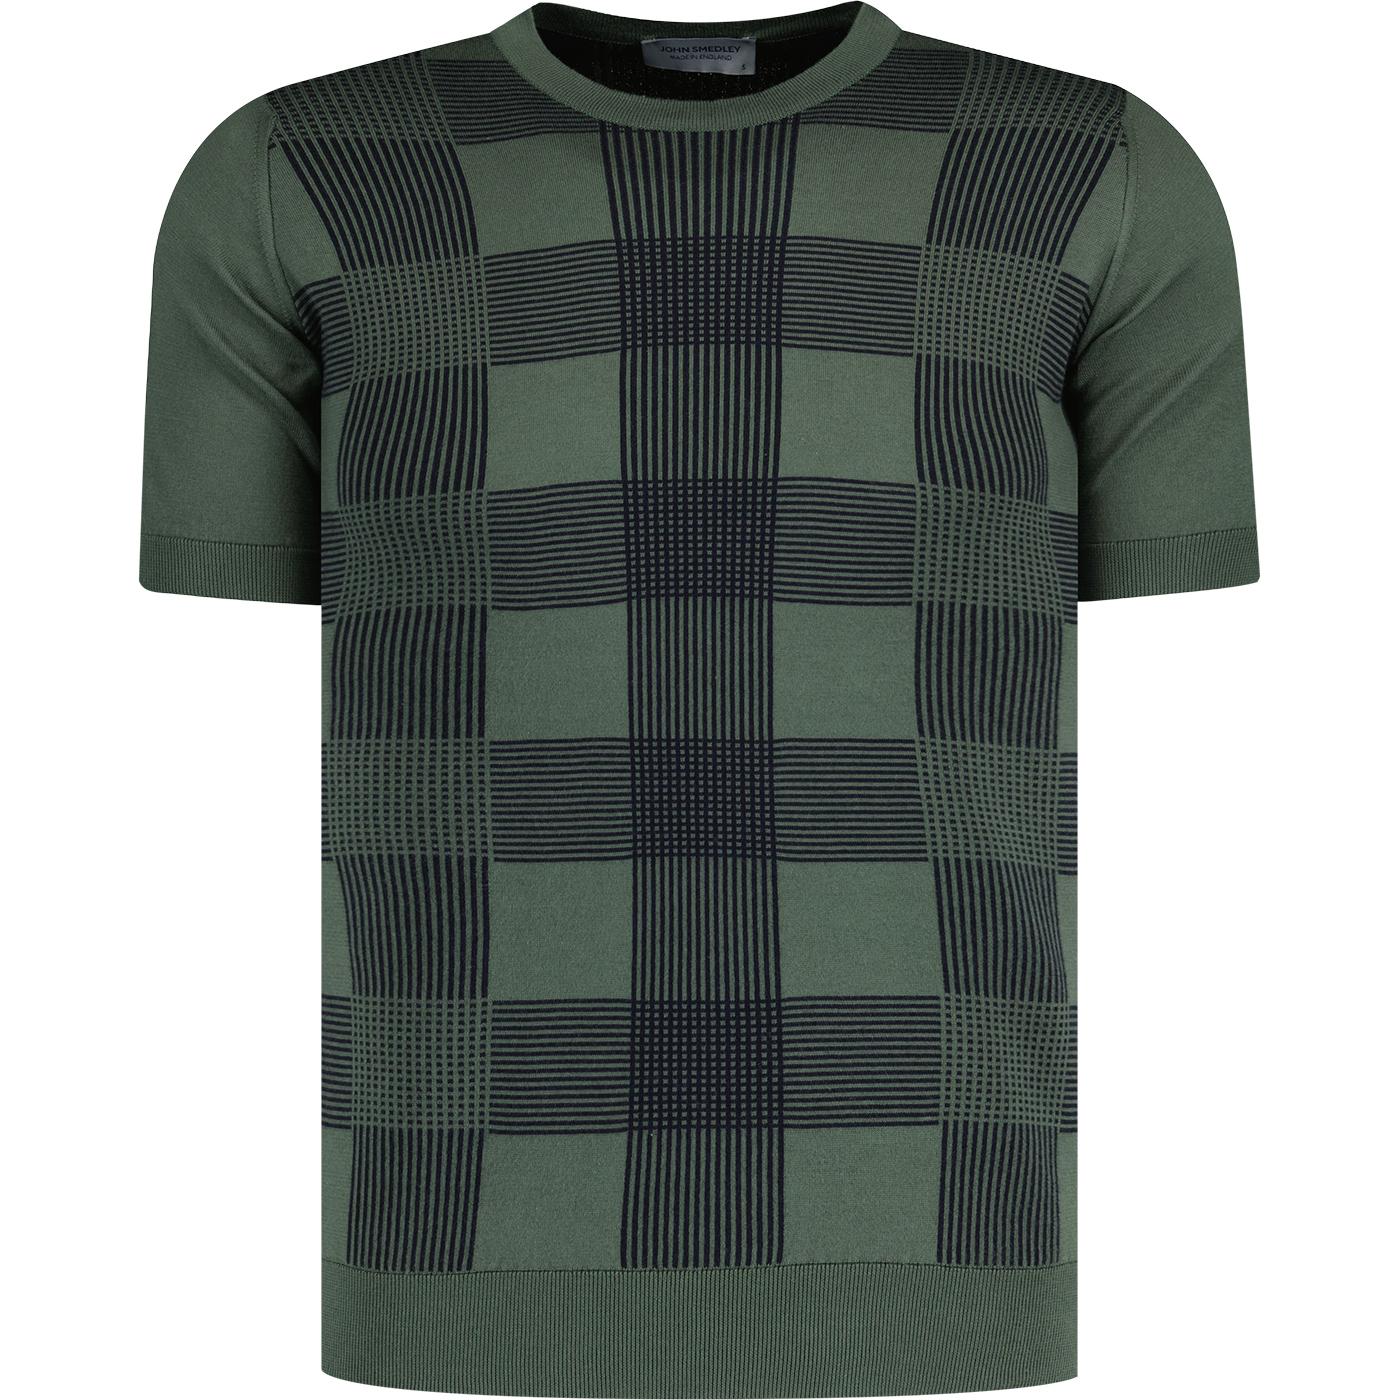 Westgate John Smedley Jacquard  Knit T-shirt P/N